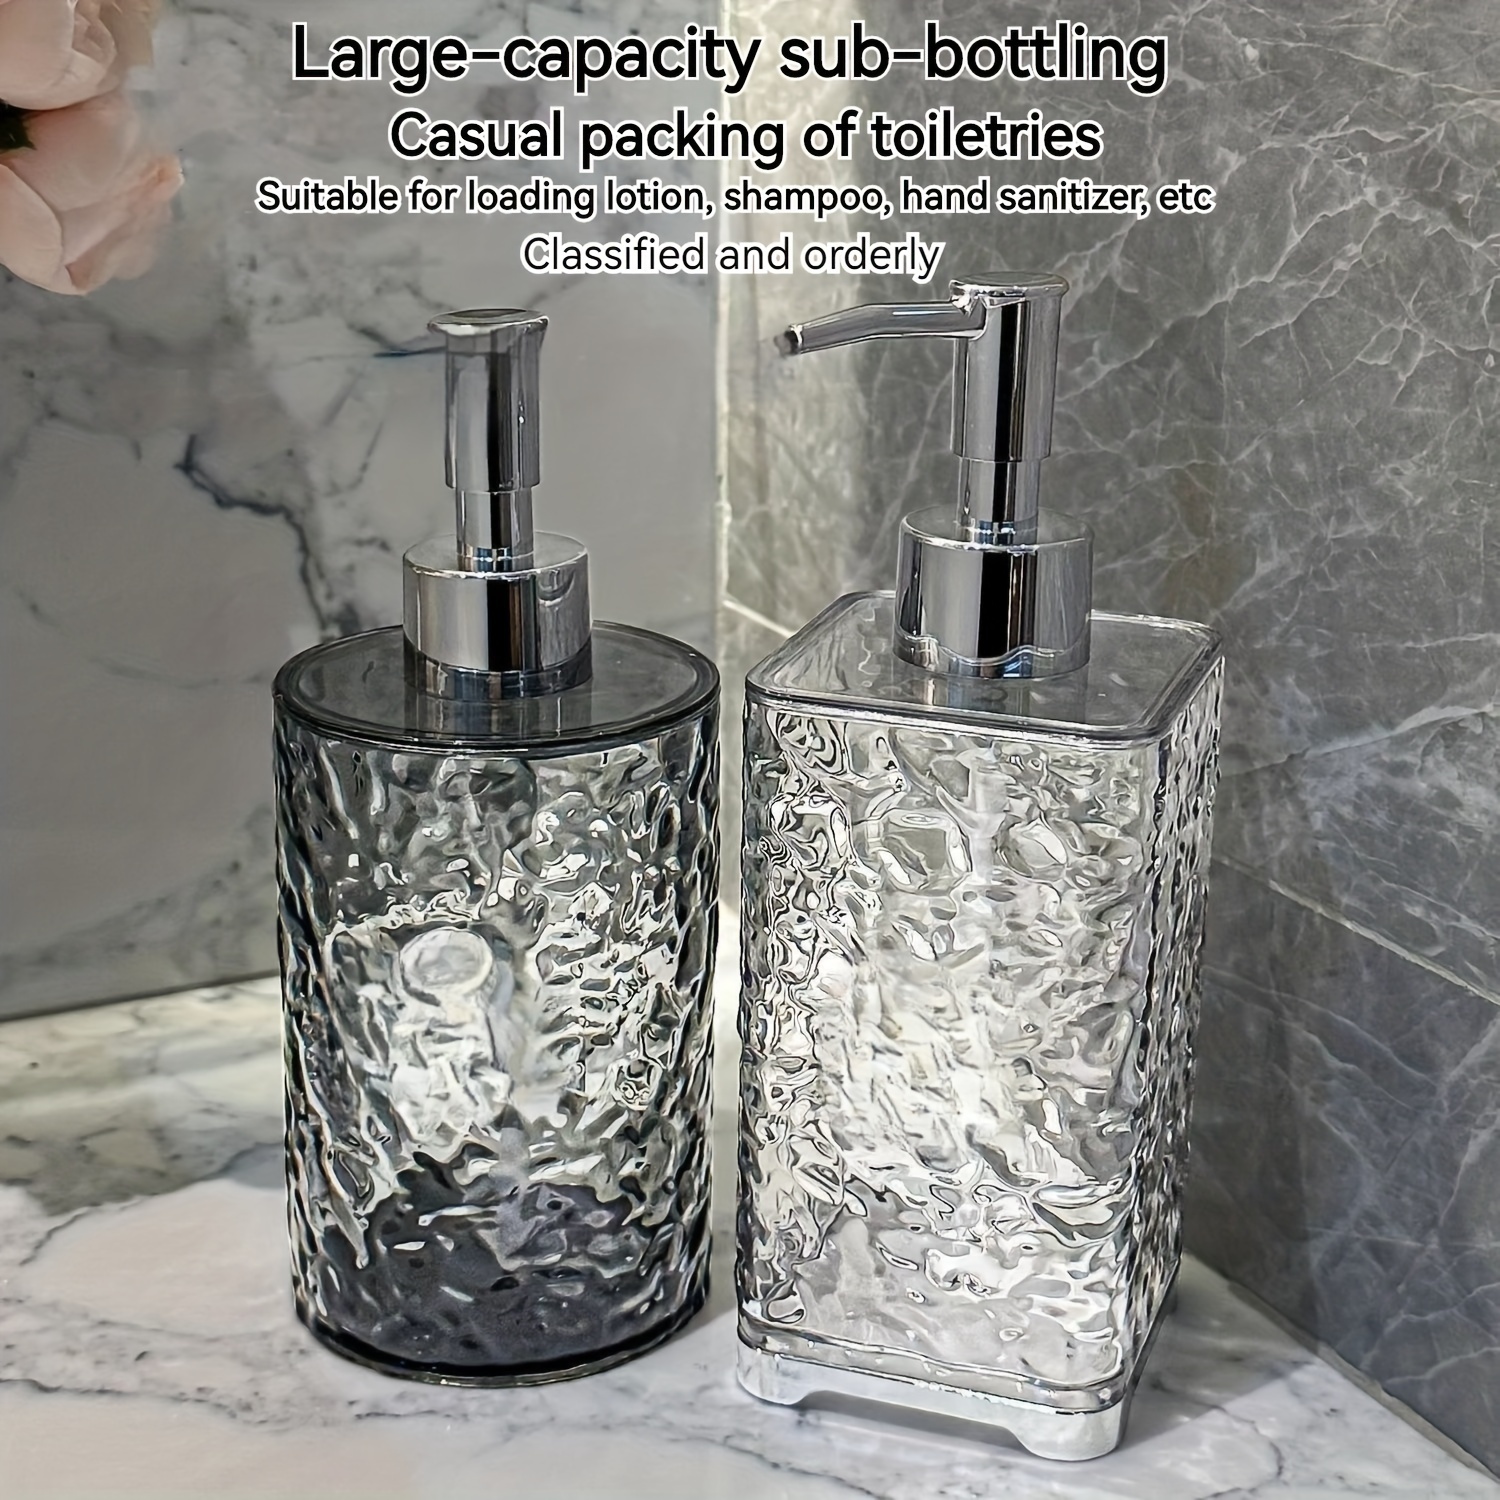 

1pc Textured Plastic Soap Dispenser, 400ml/13.53oz, Refillable Bathroom Shower Gel, Shampoo Lotion Pump Bottles, Elegant, Decorative, Bpa-free, Bathroom Accessories